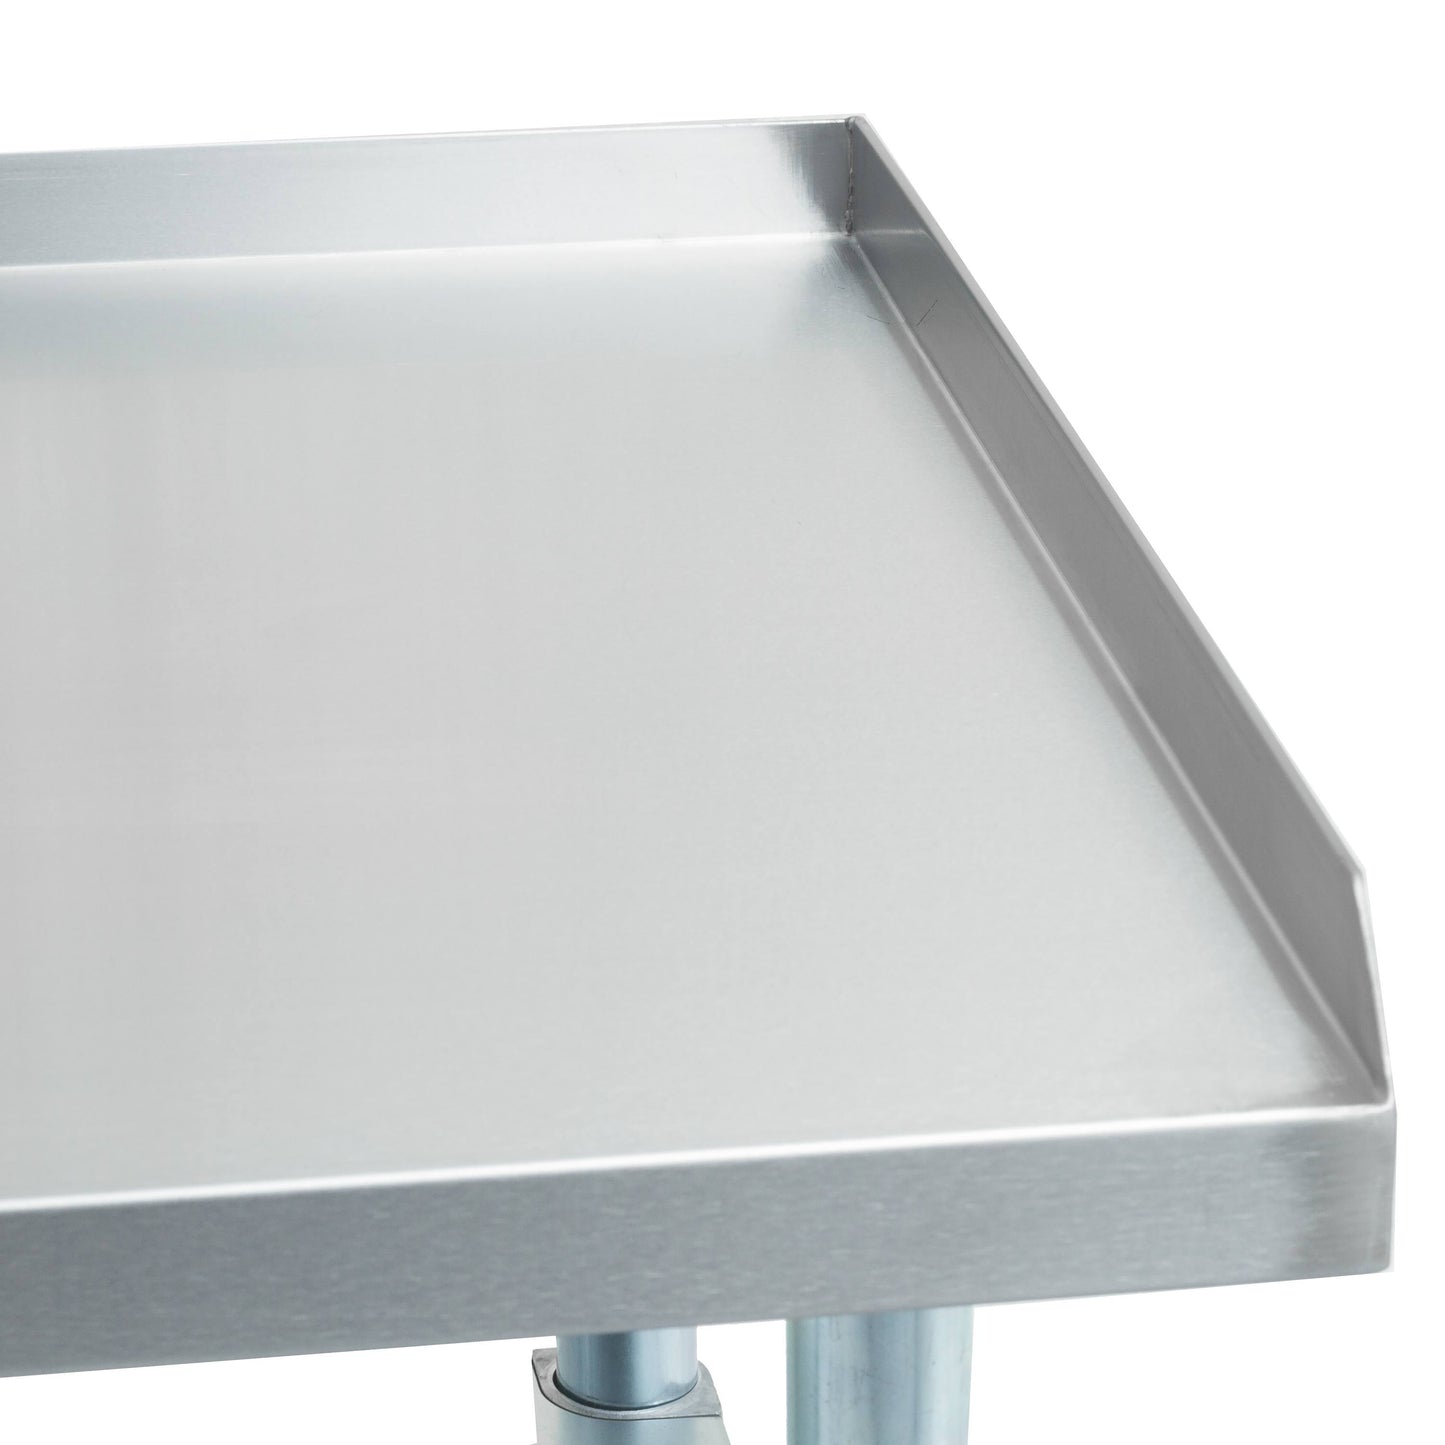 Thorinox DSTAND-3012-GS 30x12 Stainless Table - Galvanized Undershelf